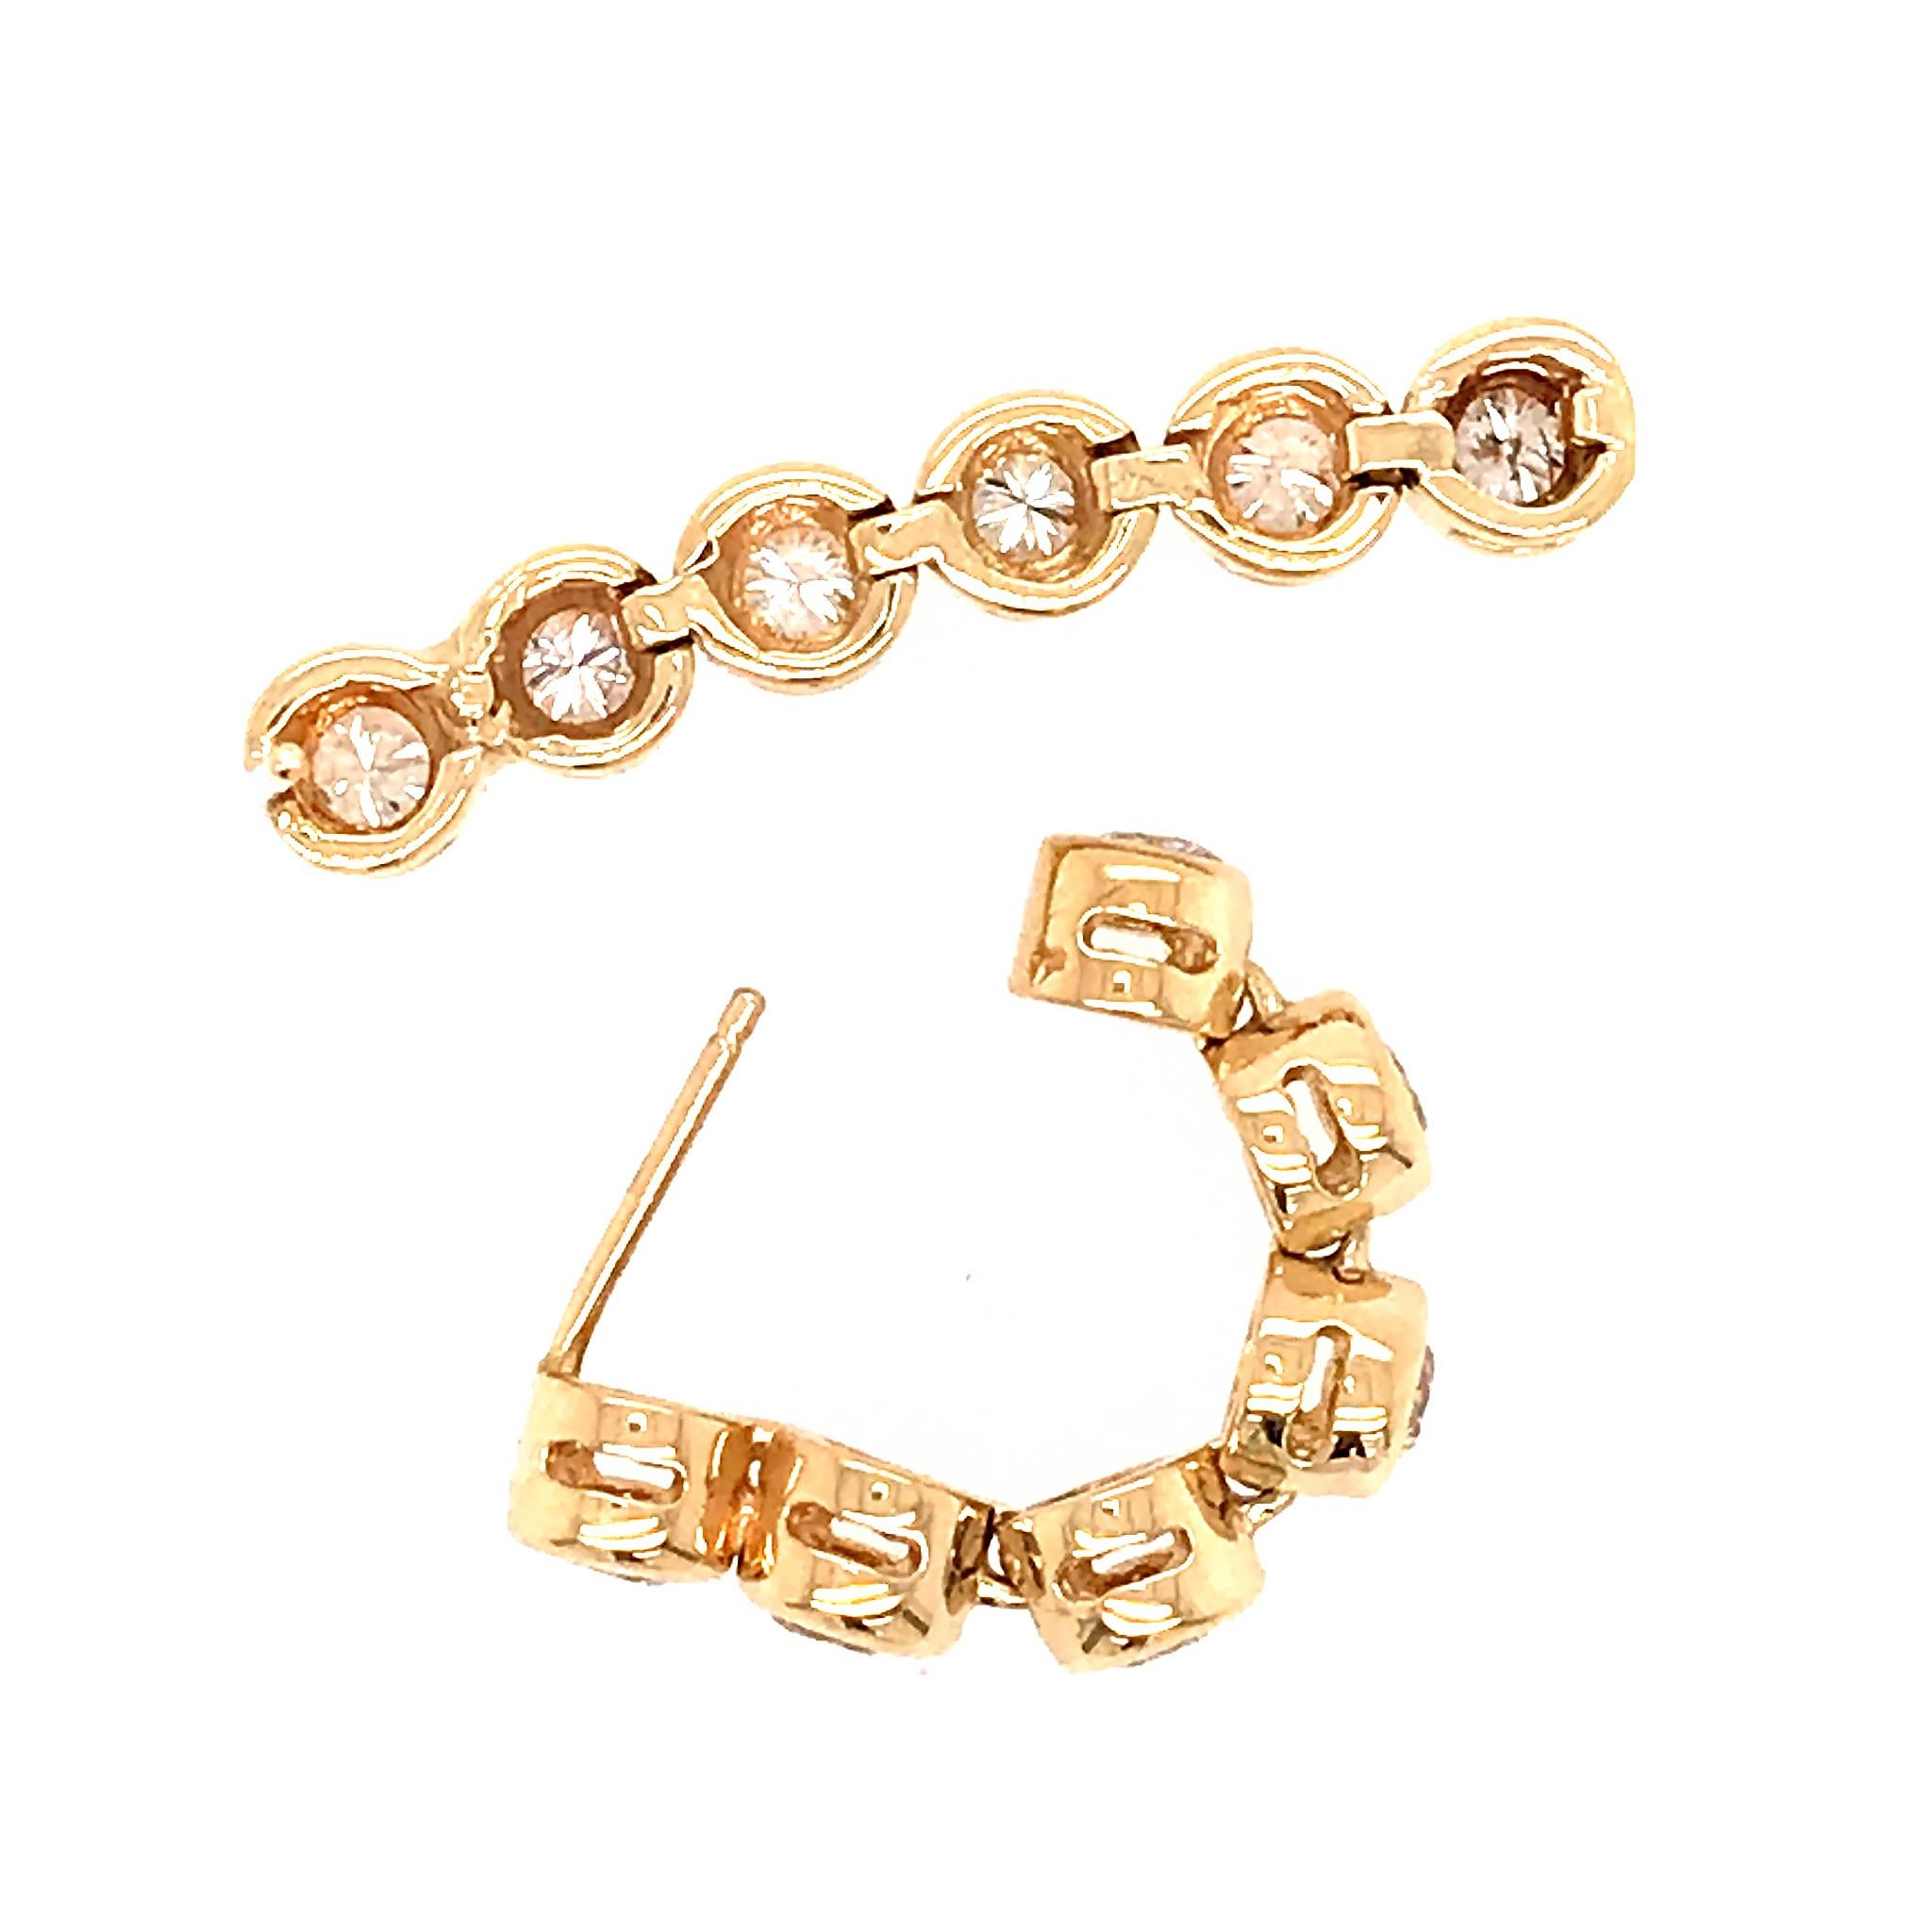 14k Yellow Gold
Diamond: 1.20 ct twd
Earrings Length: 1 inch